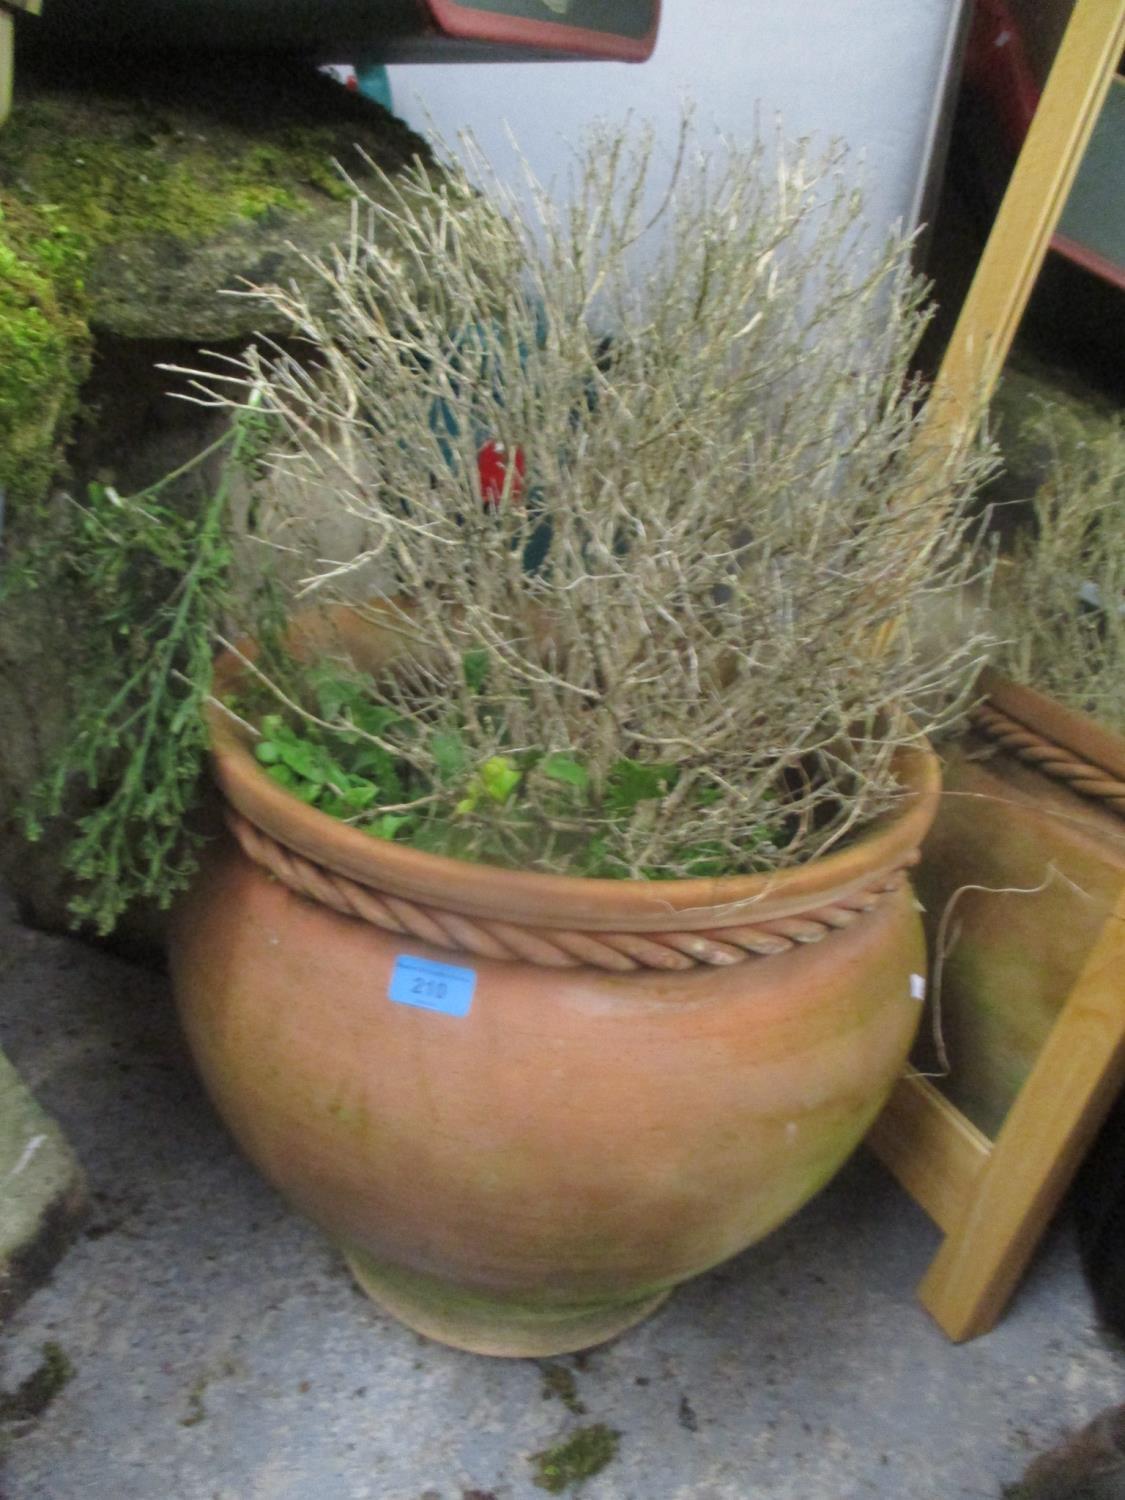 A terracotta garden planter having rope twist decoration